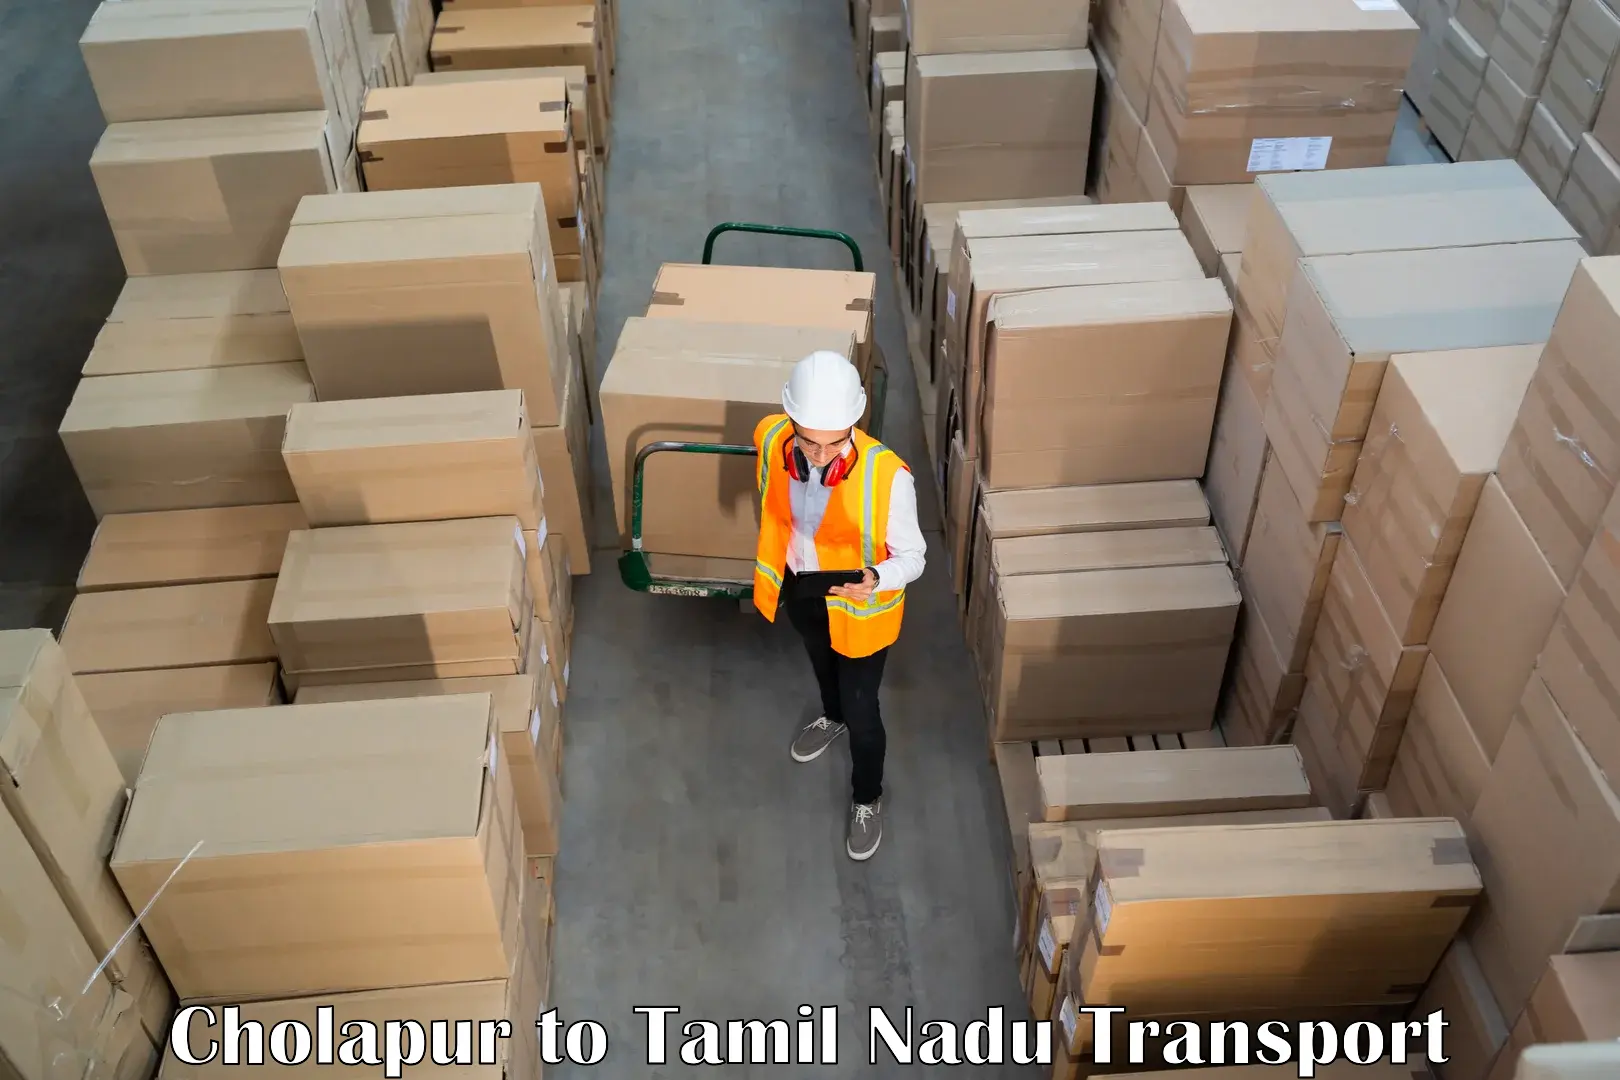 Goods delivery service Cholapur to Pennagaram